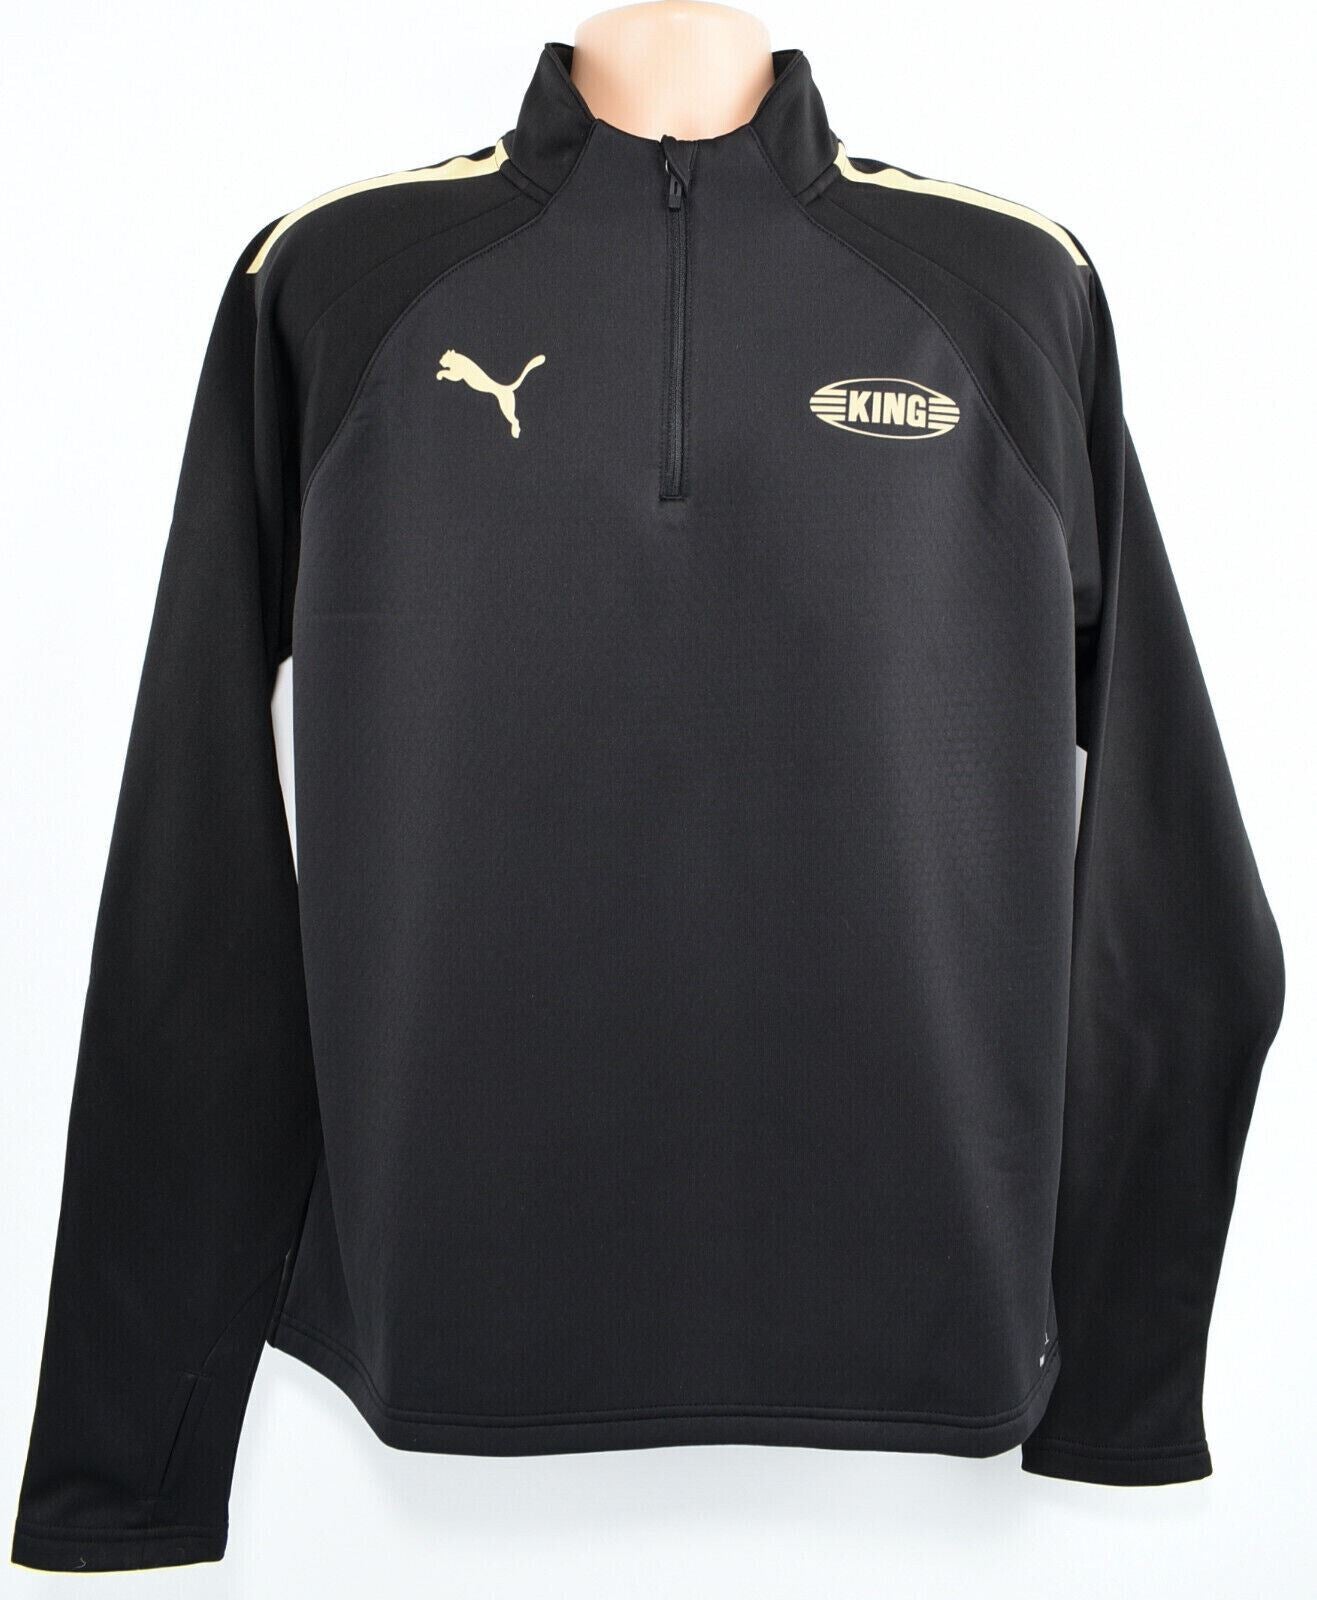 PUMA Men's KING WarmCell 1/2 Zip Sweatshirt, Black/Gold, size SMALL